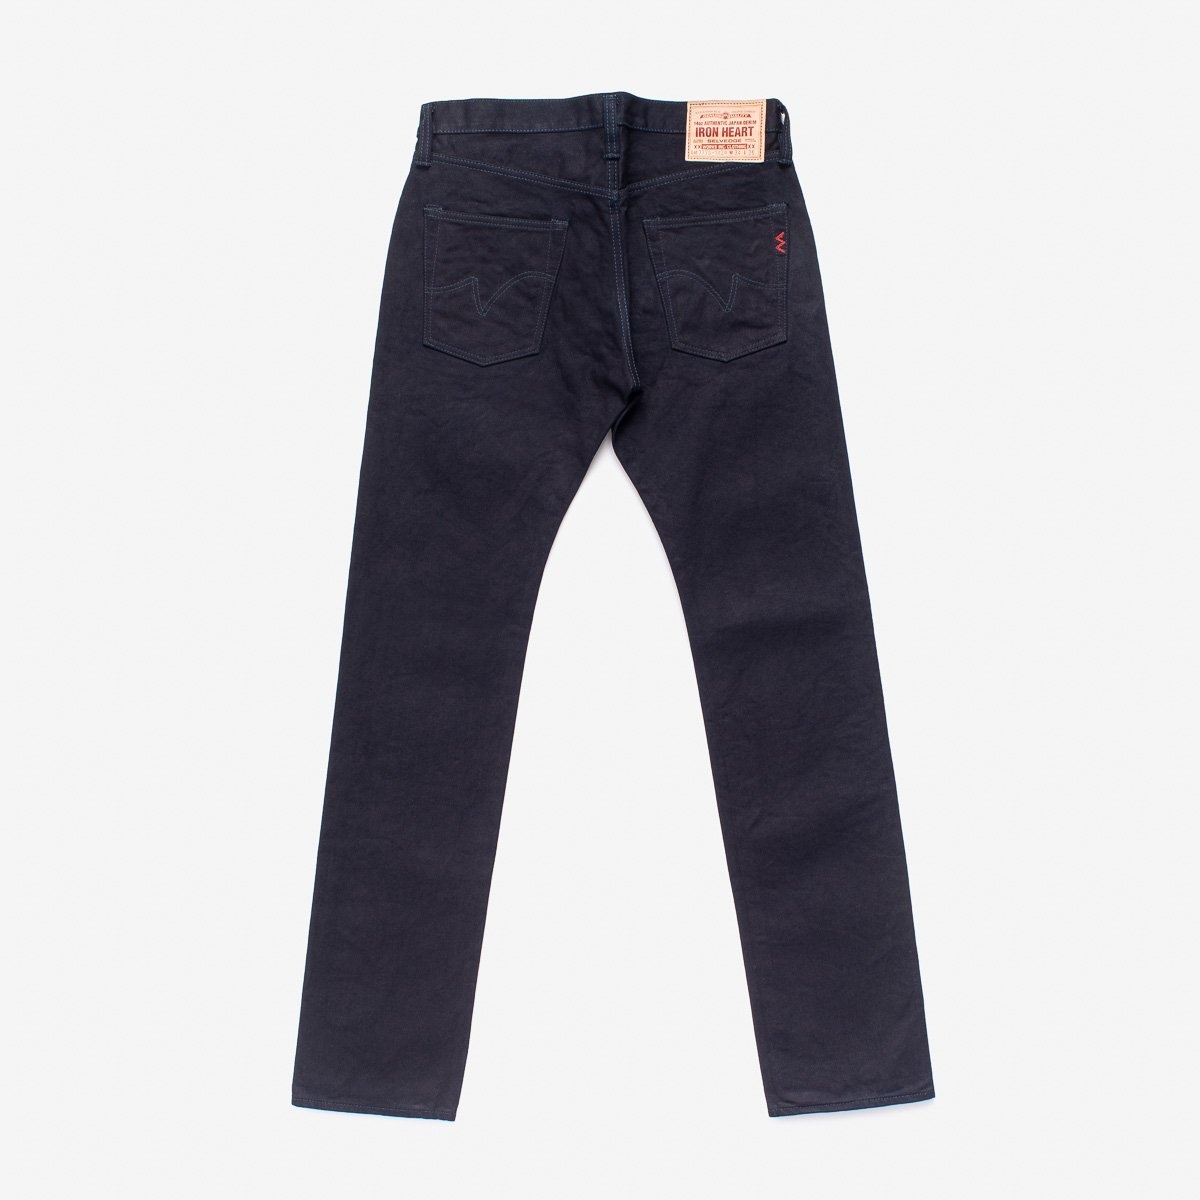 IH-777S-142ib 14oz Selvedge Denim Slim Tapered Cut Jeans - Indigo/Black - 4